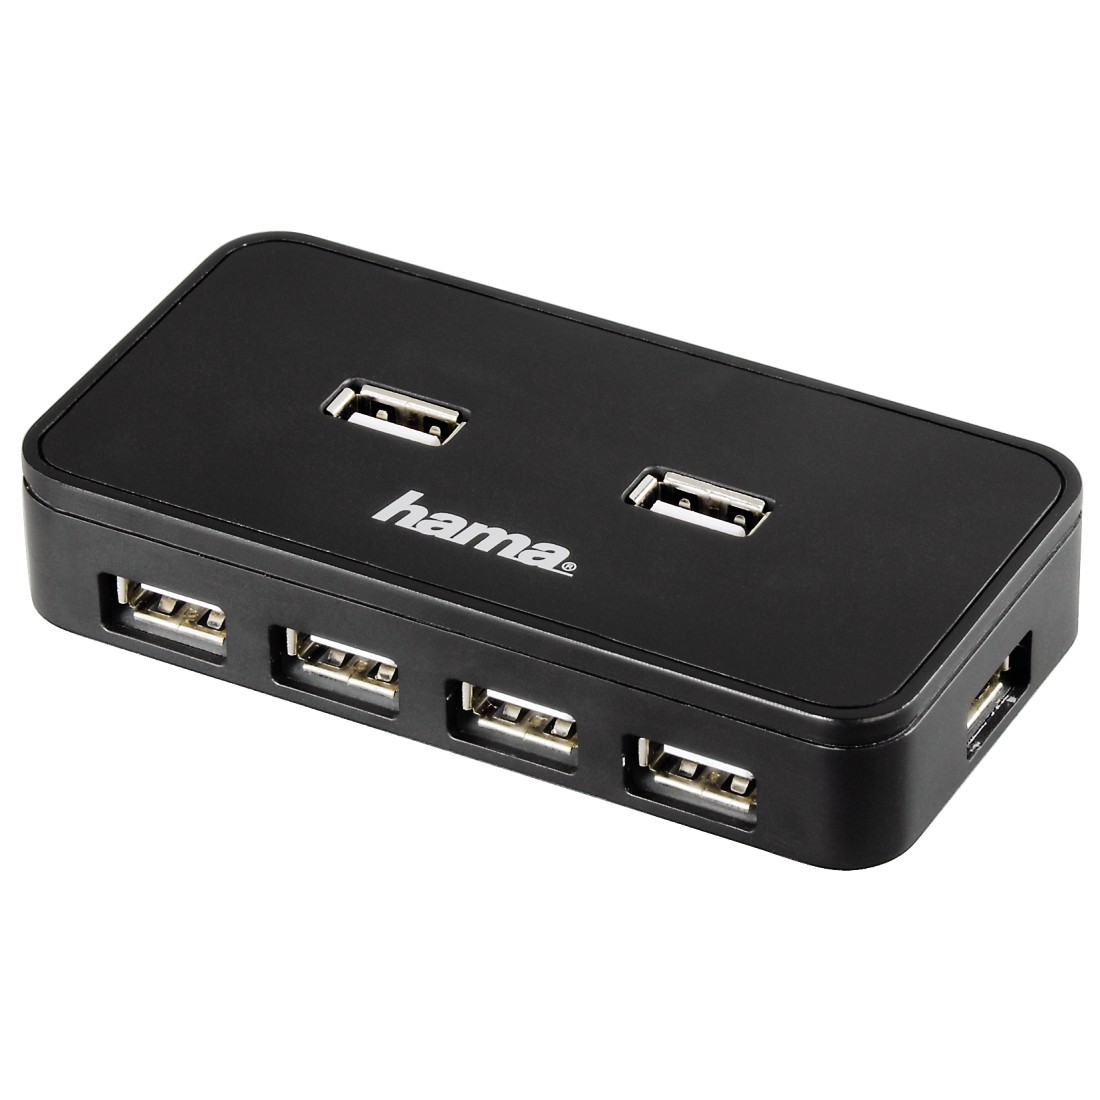 Hama USB 2.0 Hub 1:7, with power supply, black, cardboard box